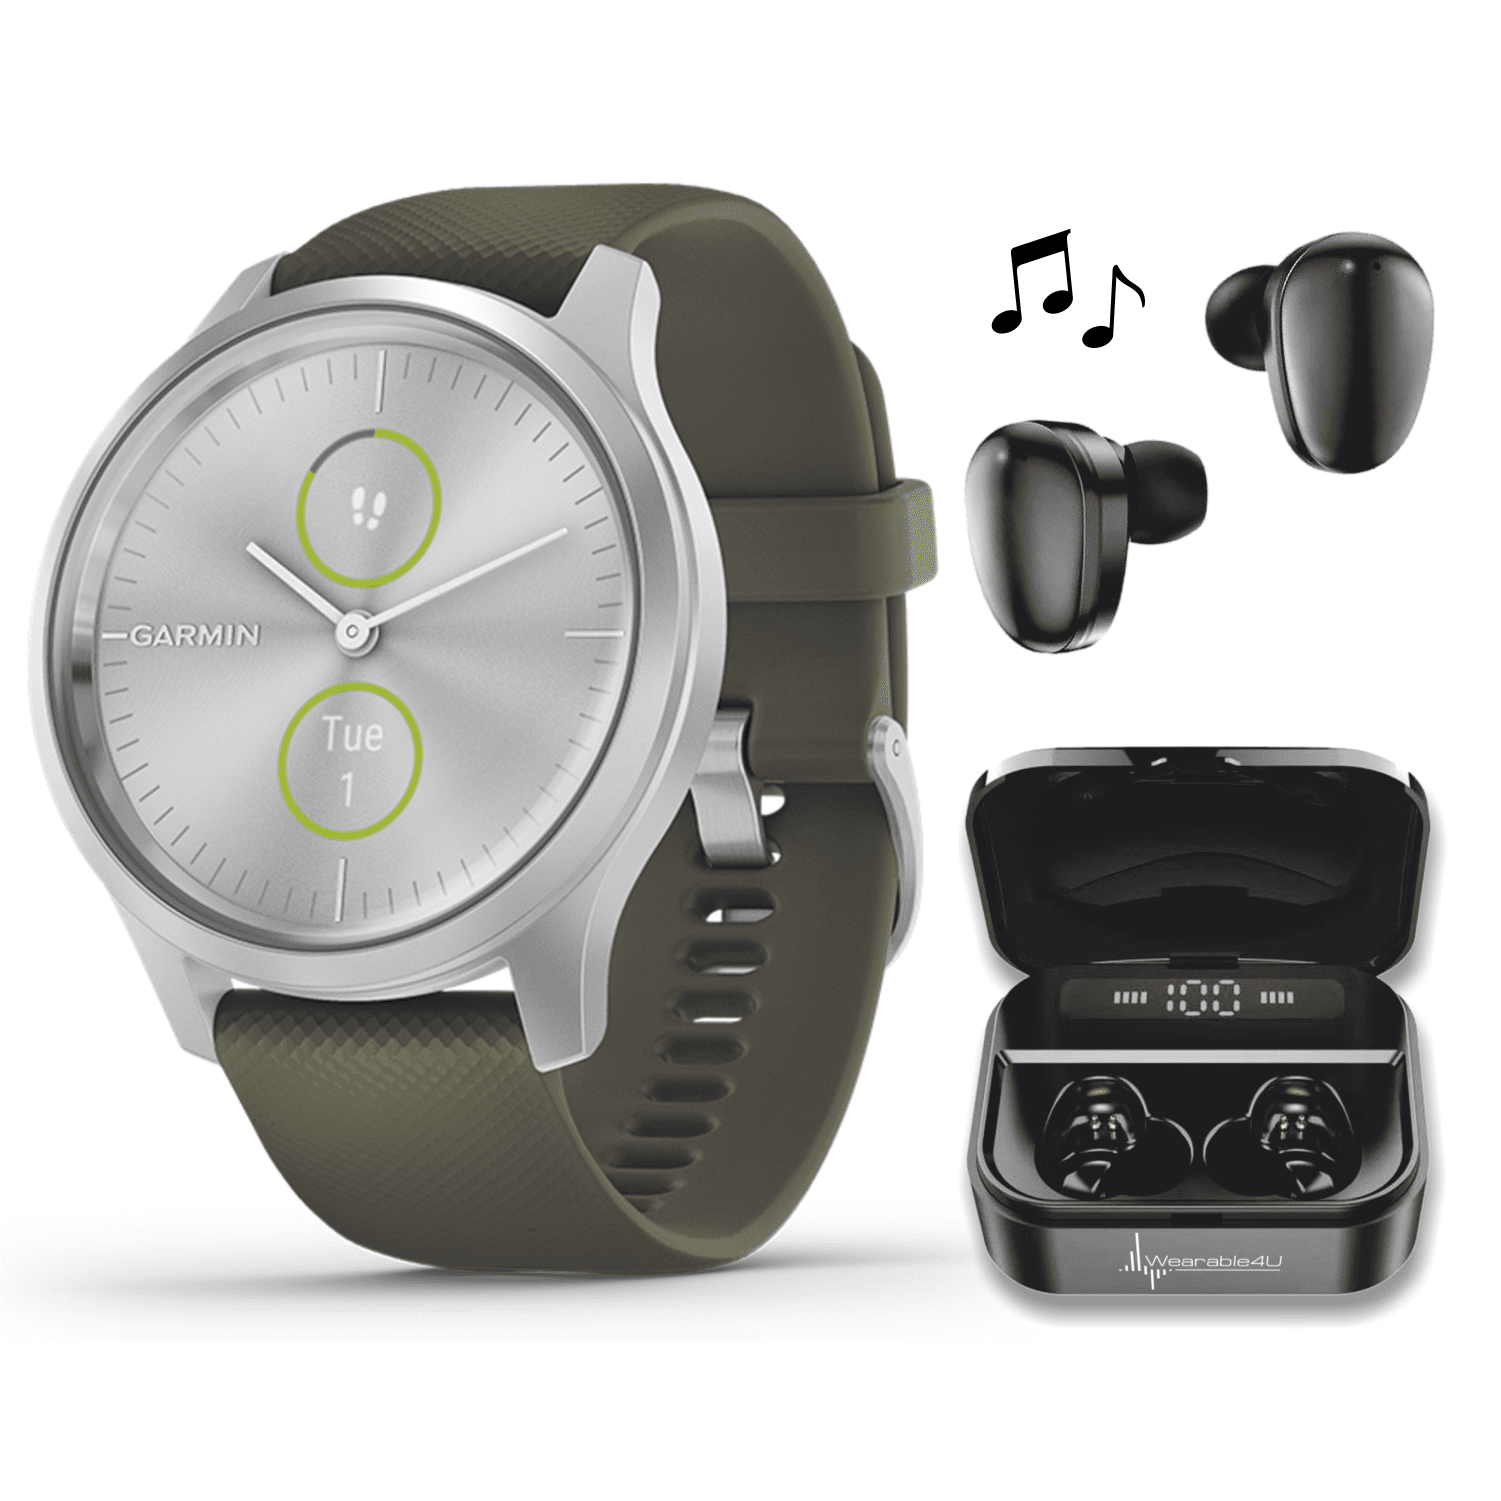 Garmin vivomove sport hybrid smartwatch review: too niche